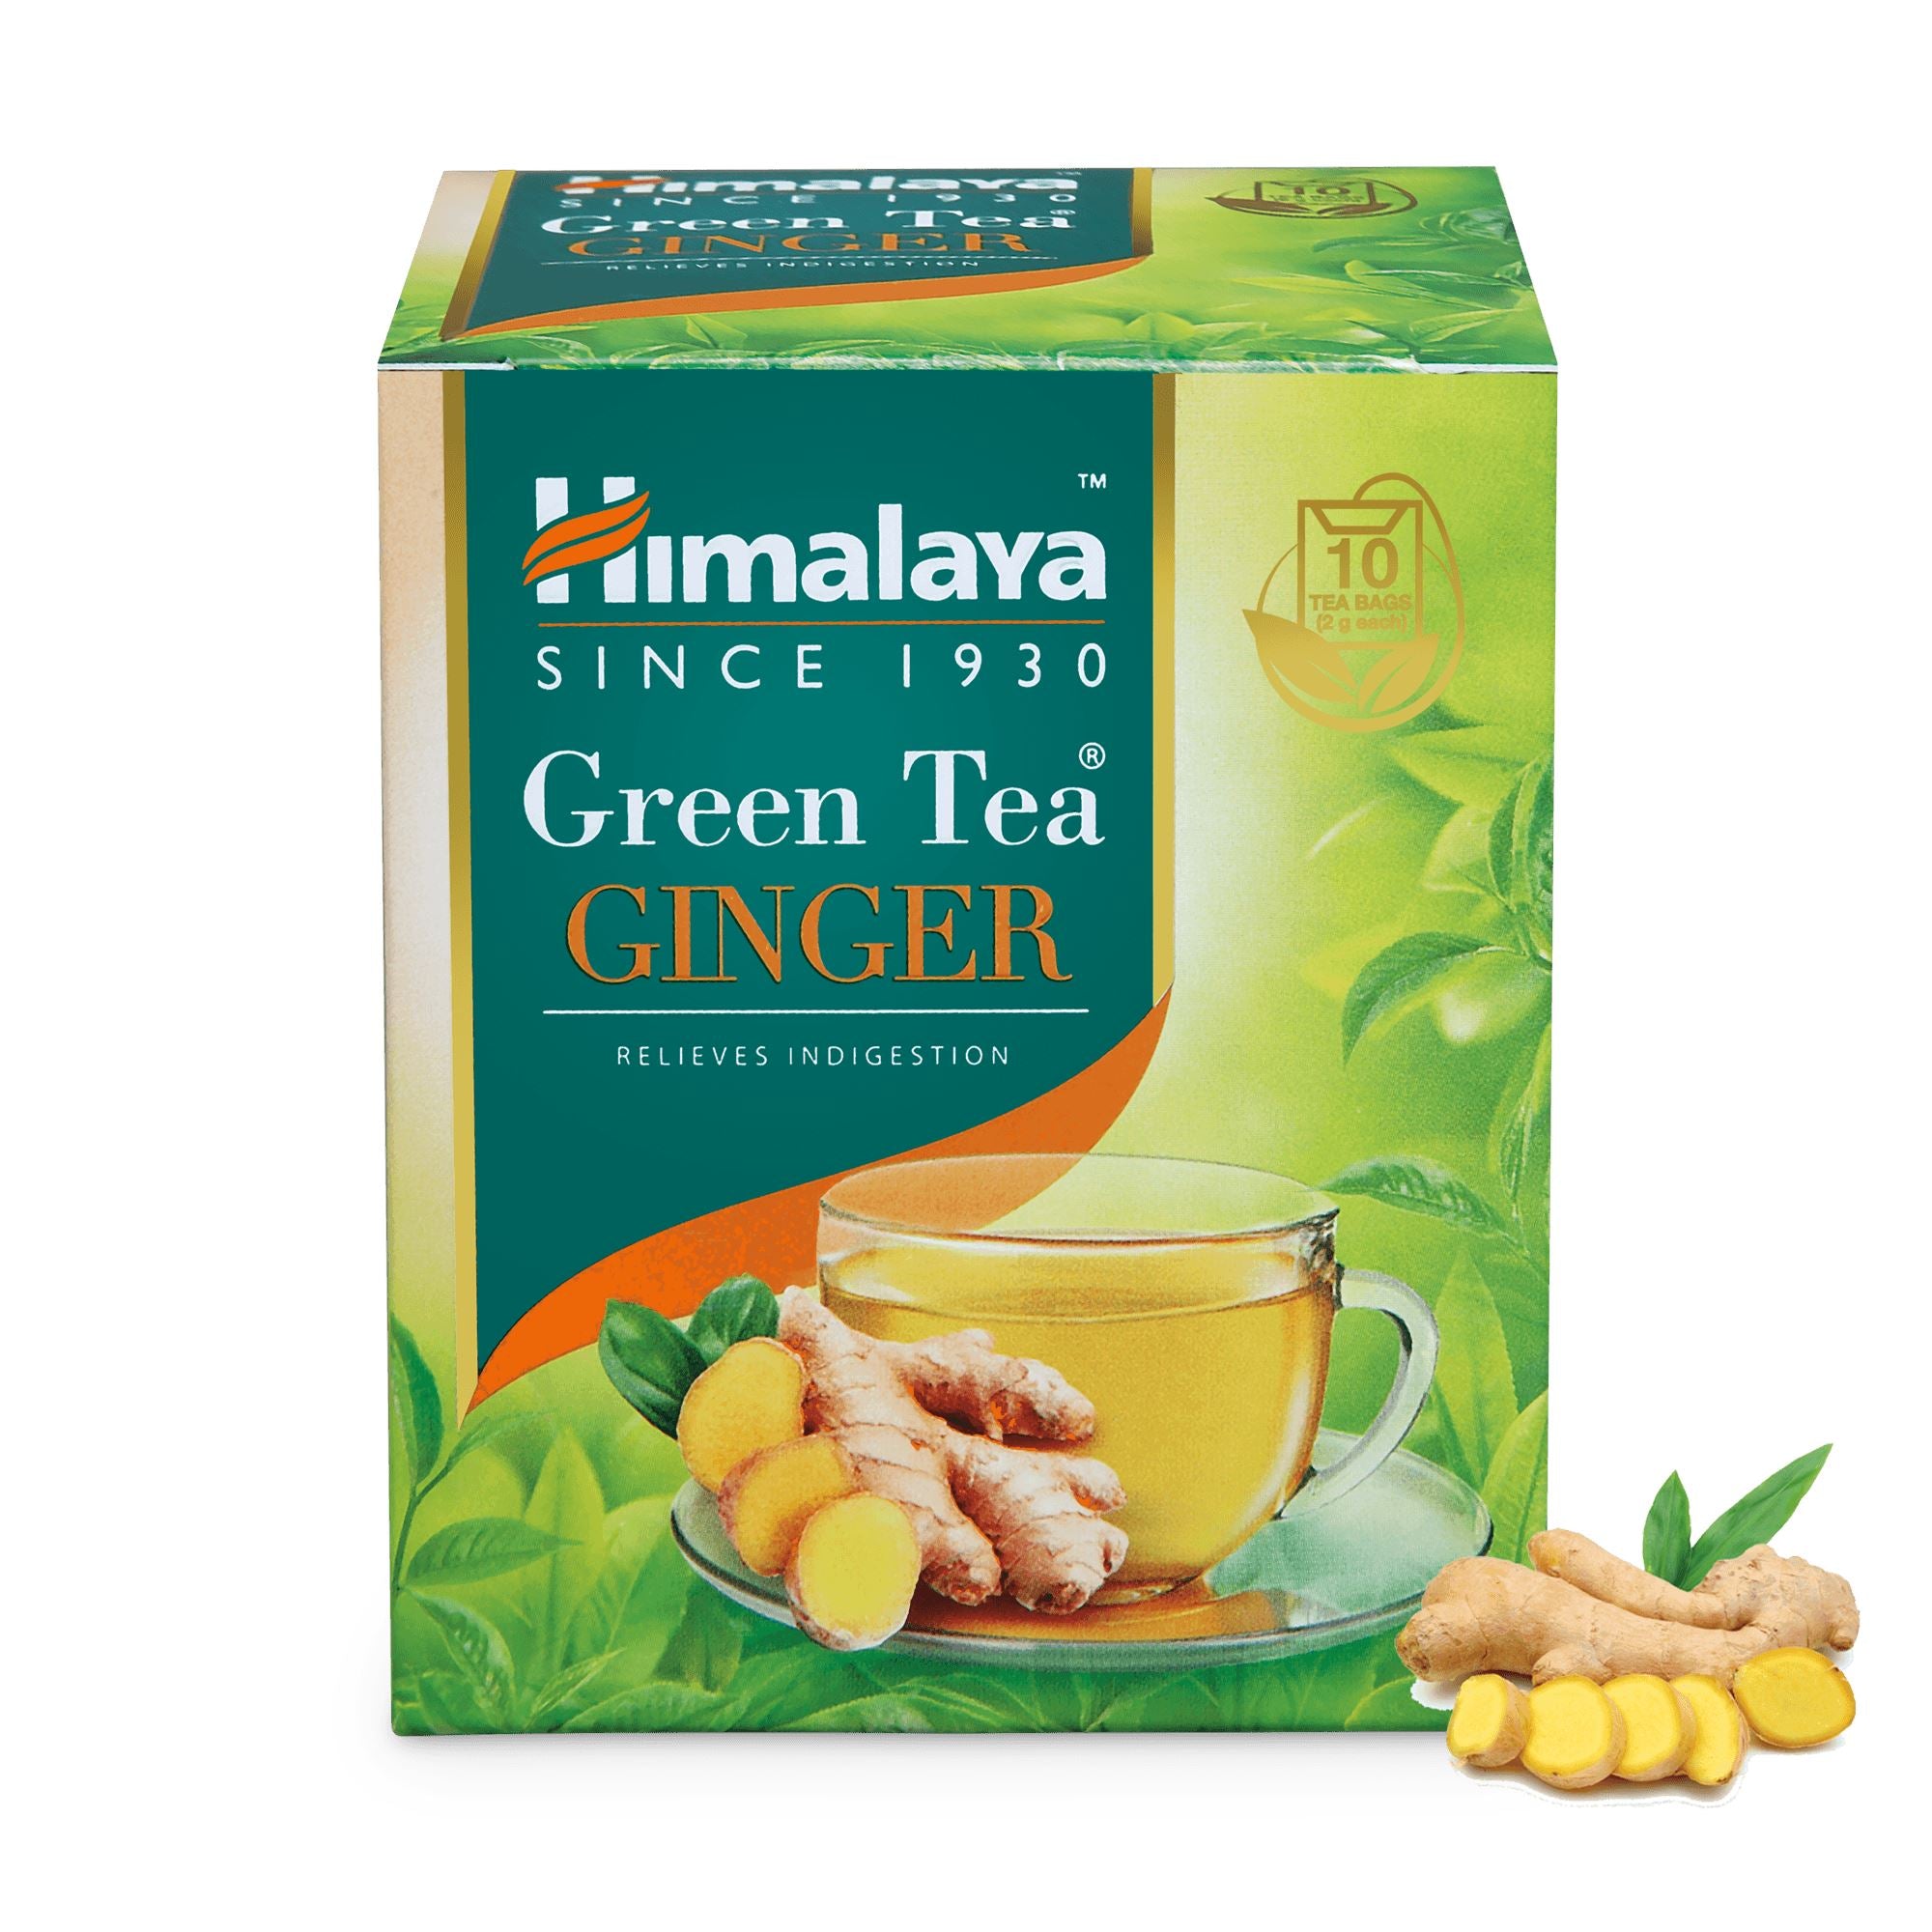 Himalaya Green Tea GINGER - Aids digestion and metabolism